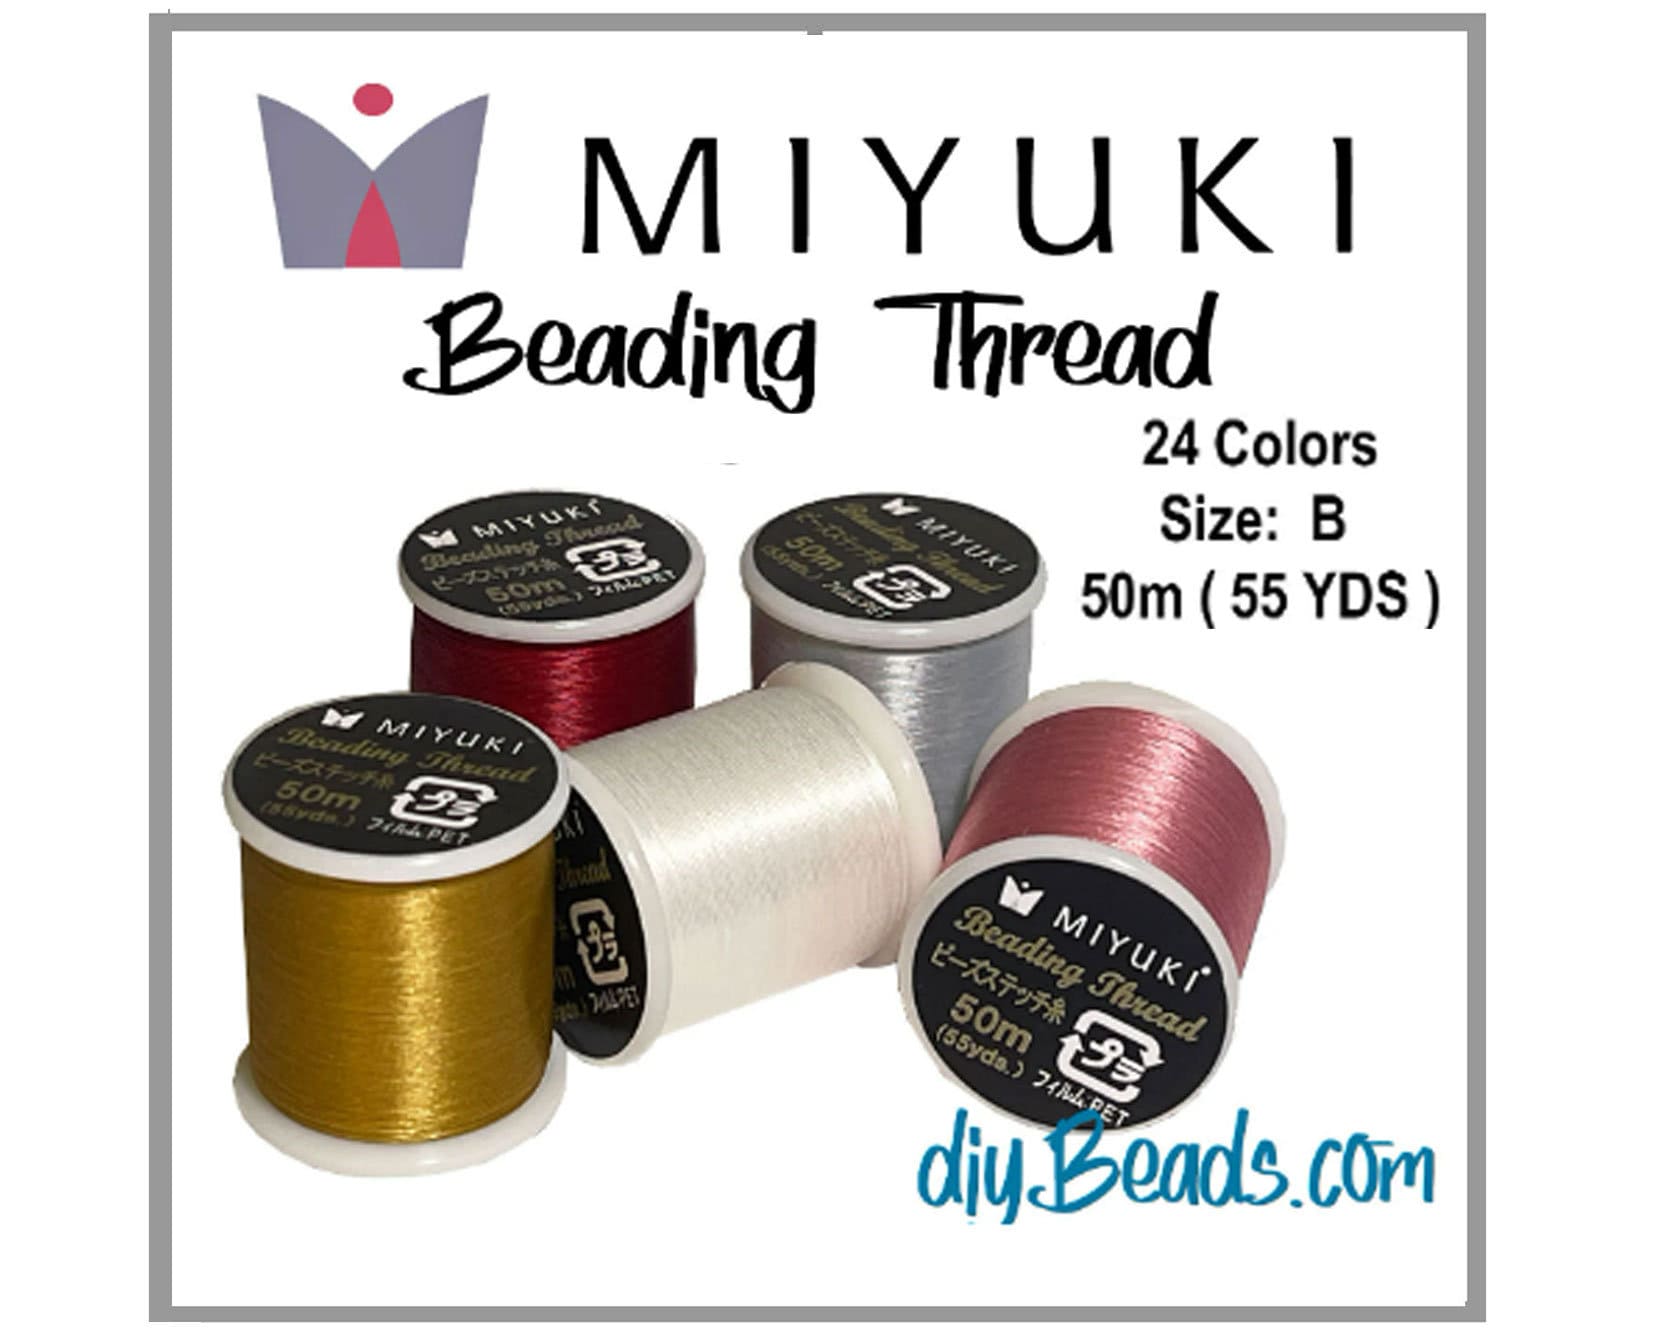 Miyuki Beading Thread Nylon Beading Thread Made in Japan 24